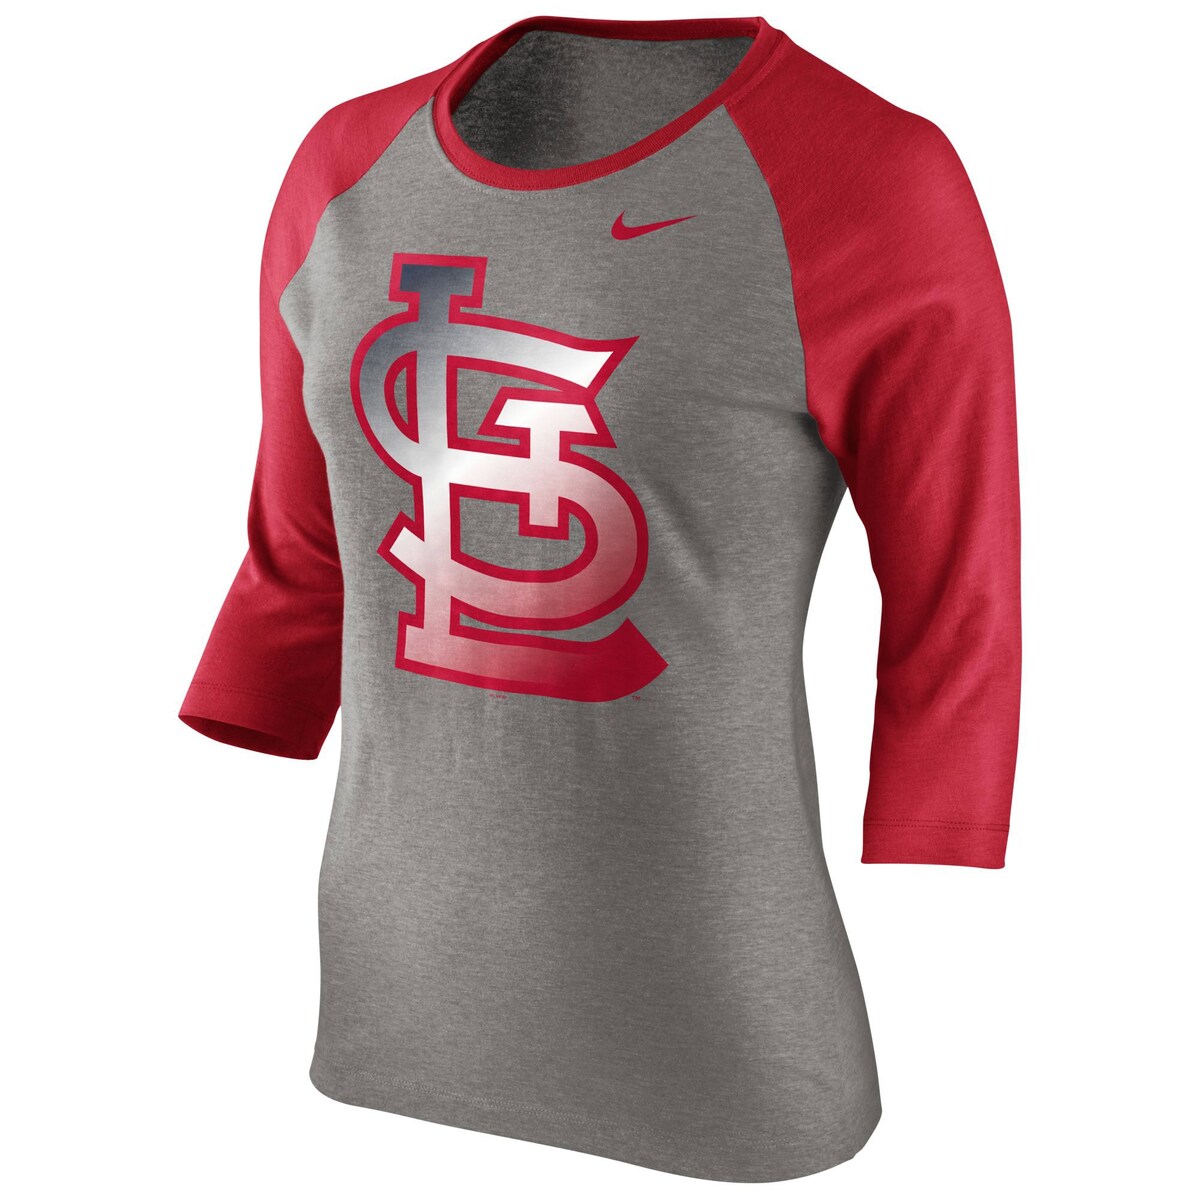 MLB J[WiX TVc Nike iCL fB[X OC (Women's MLB Gradient Raglan Long Sleeve Shirt)